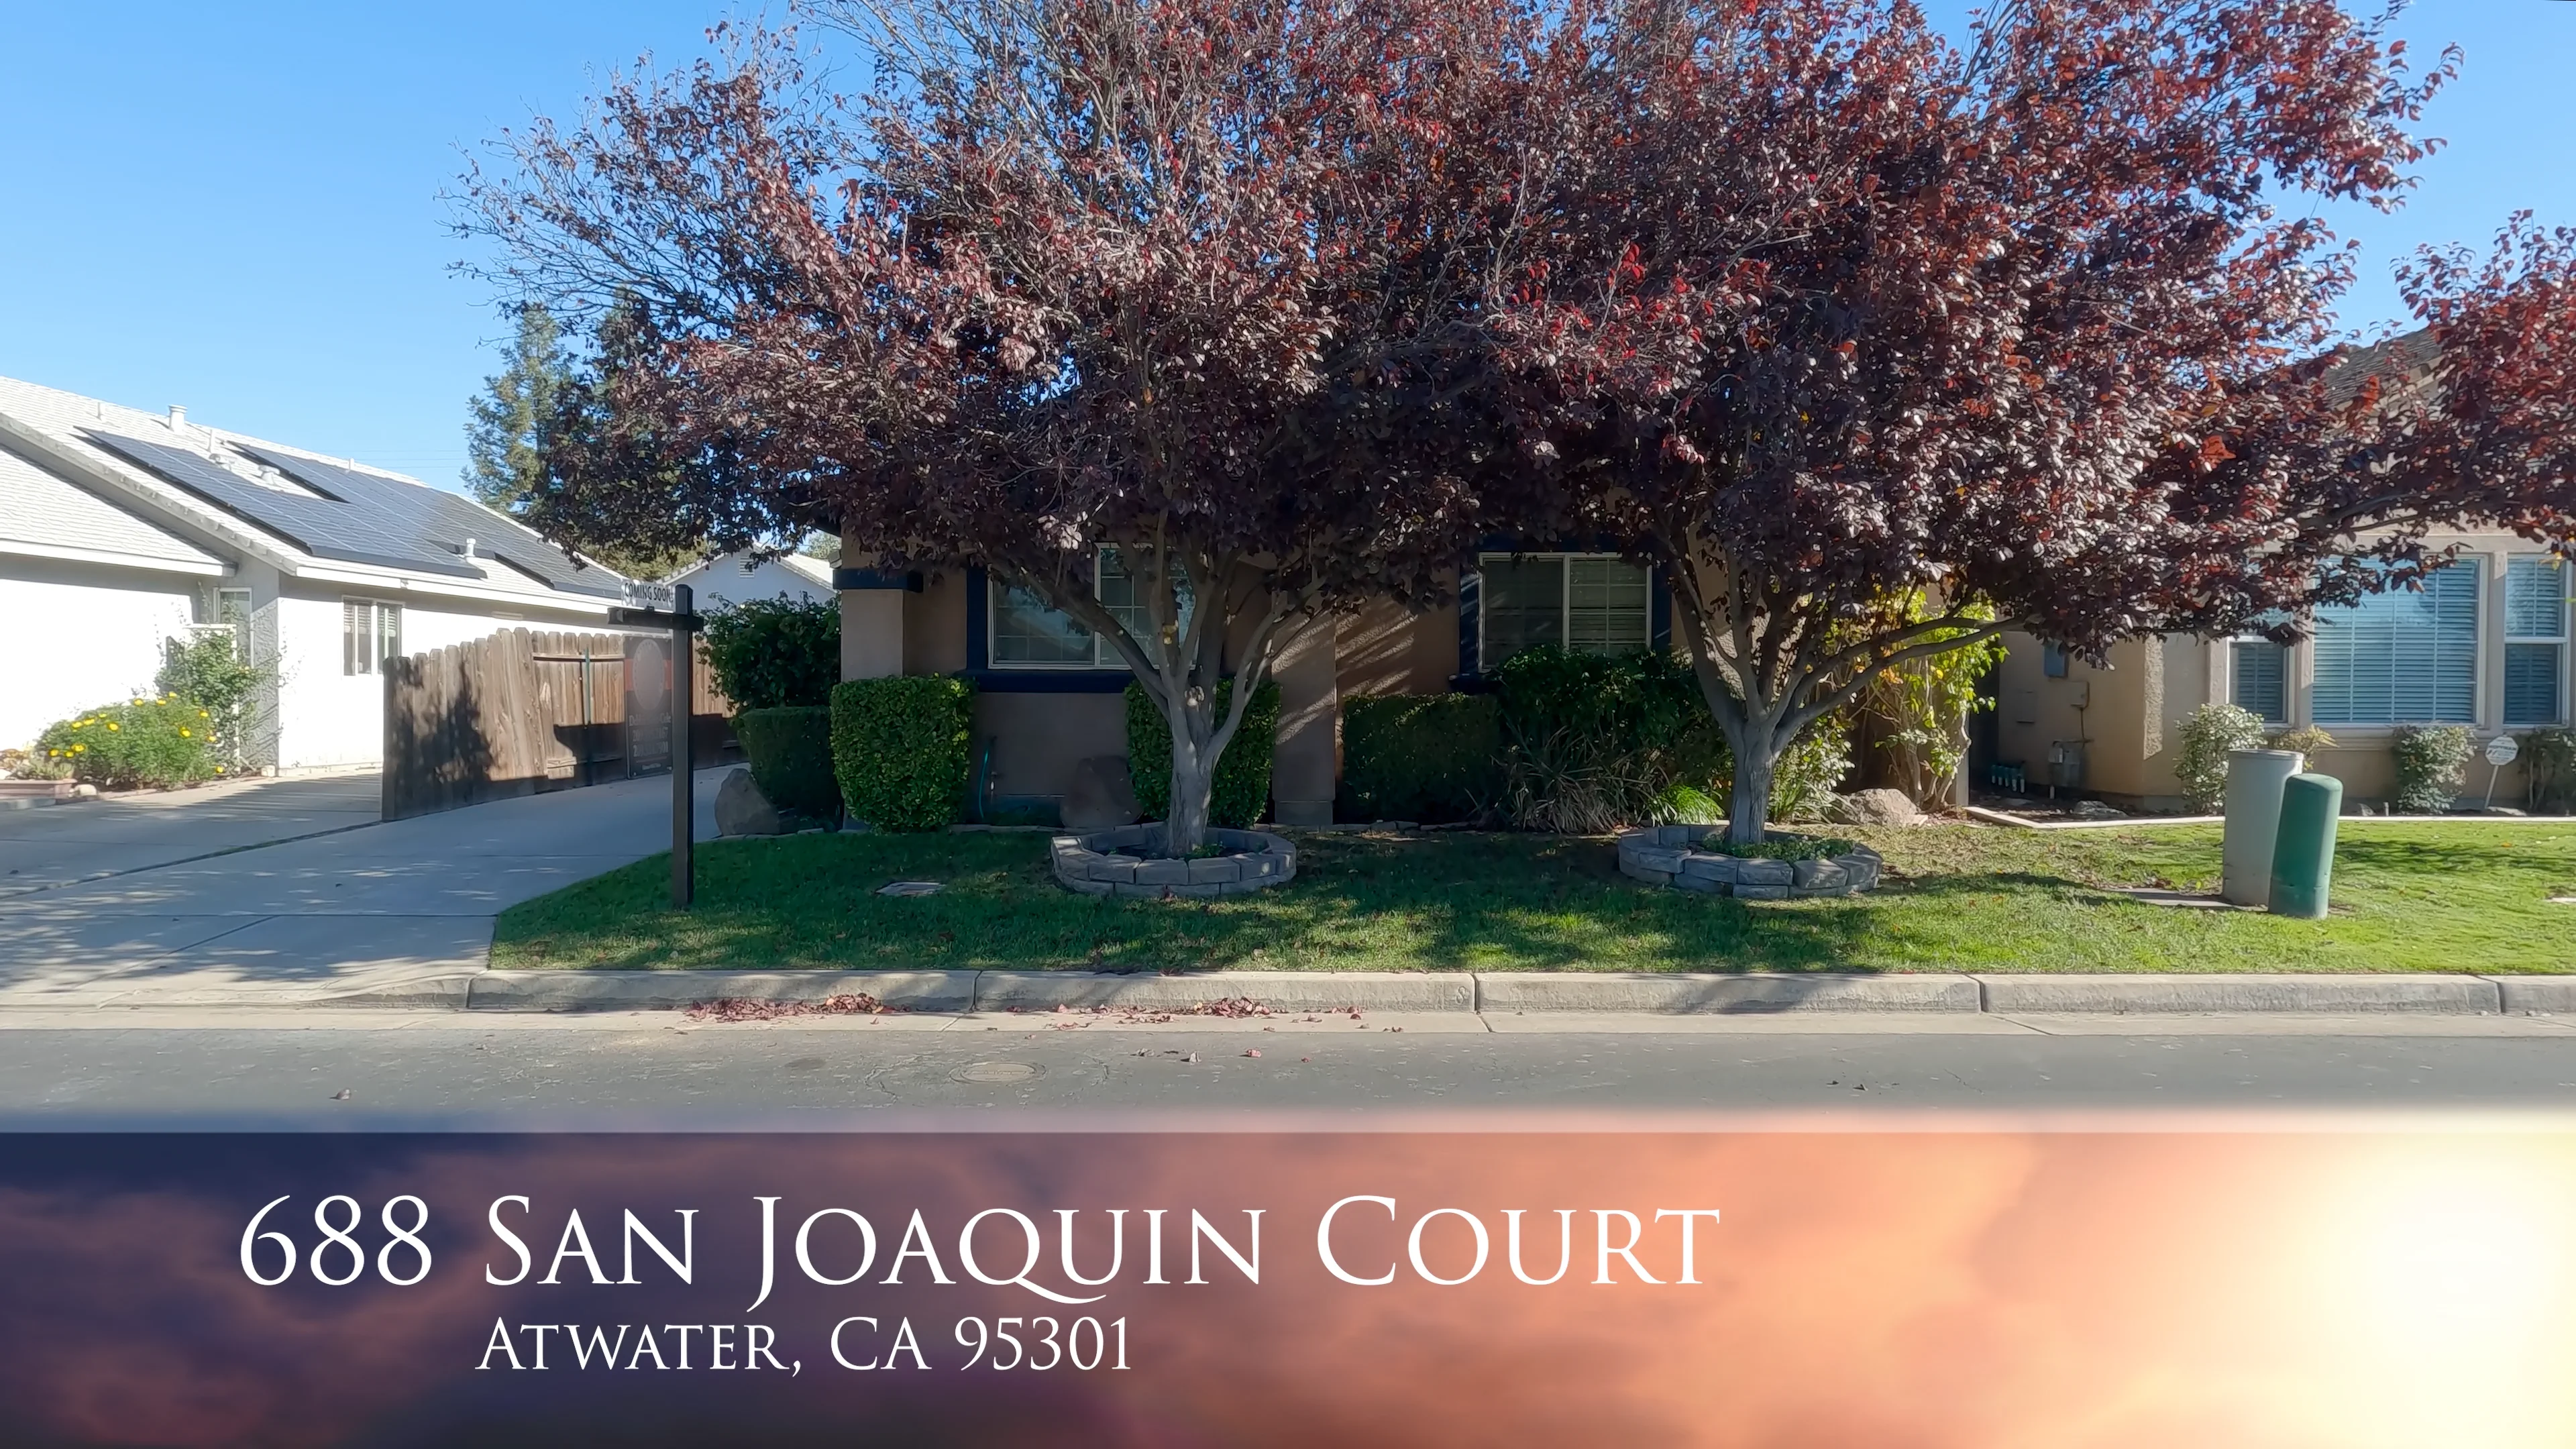 688 San Joaquin Court Atwater CA 95301 on Vimeo